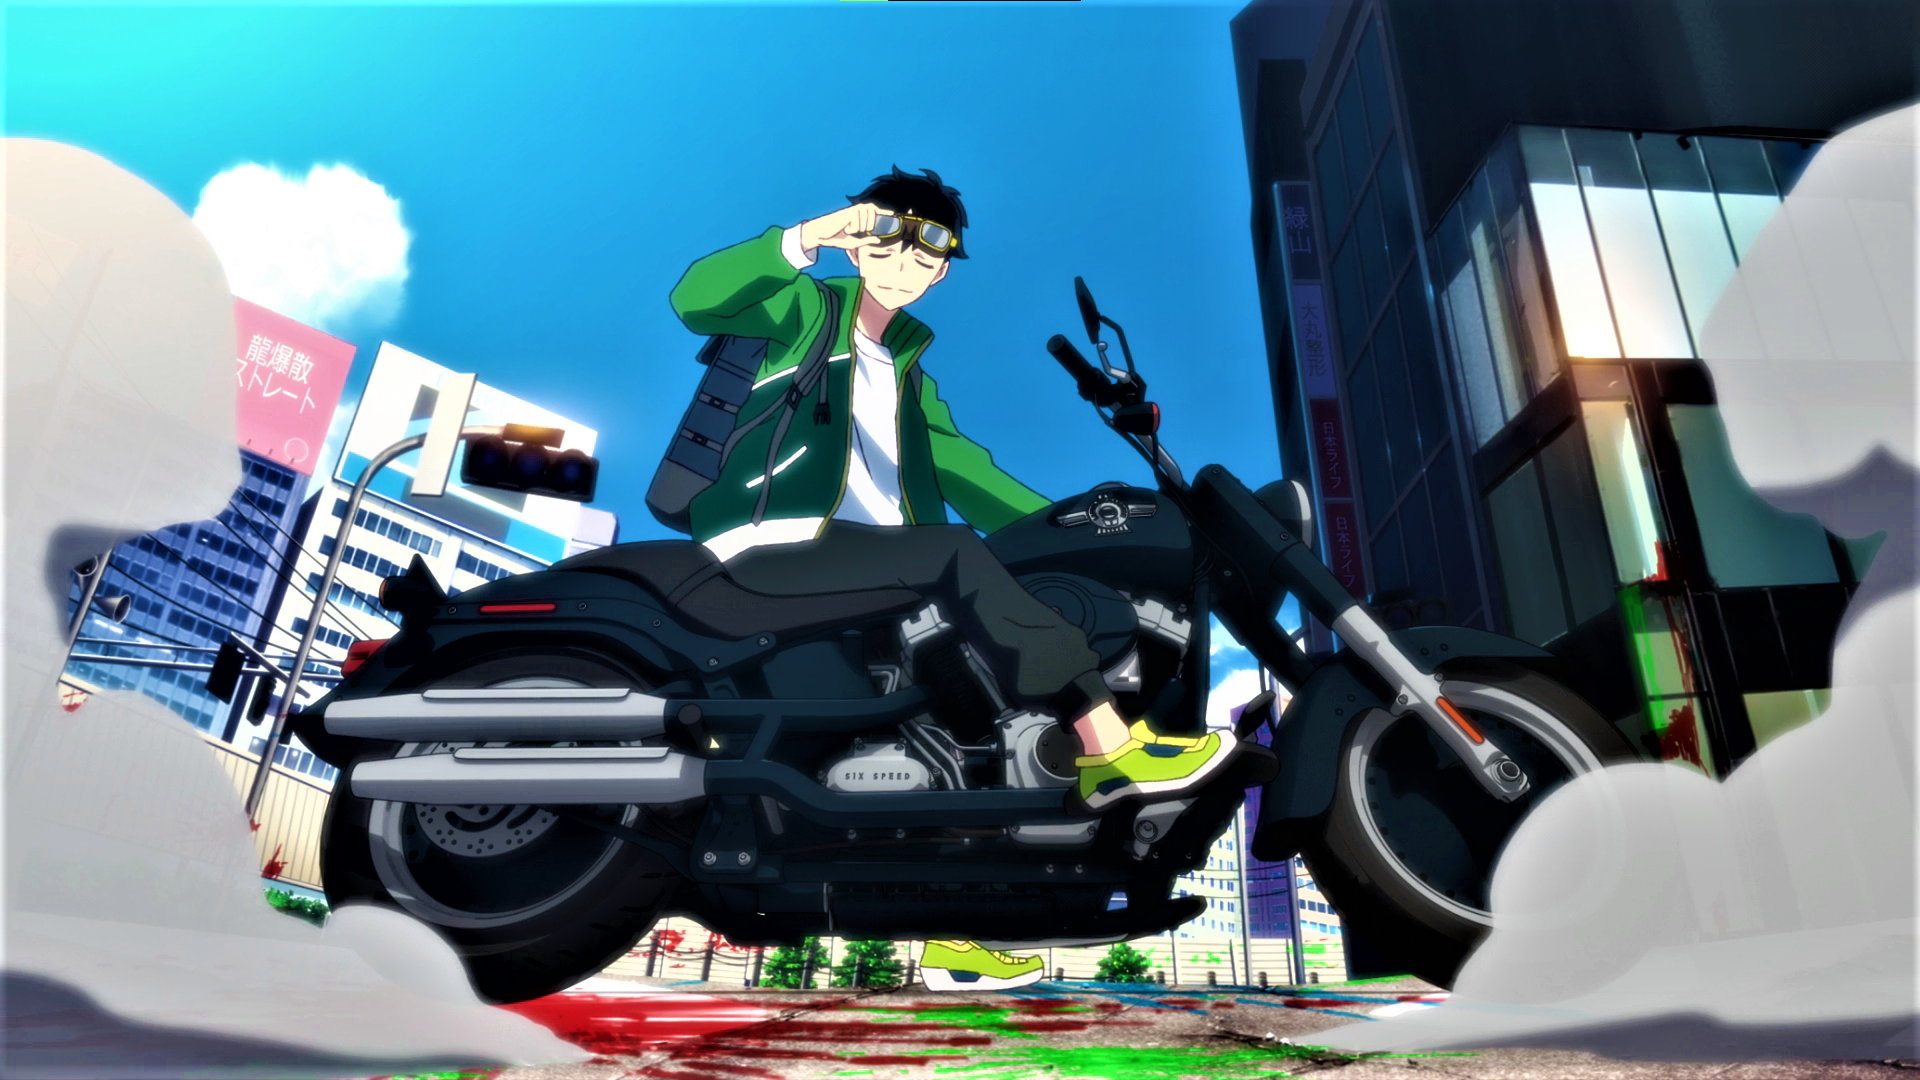 Zom 100 Bucket List Of The Dead Akira Tendou Motorcycle Smoke Sky Clouds Building Smiling Anime Anim 1920x1080